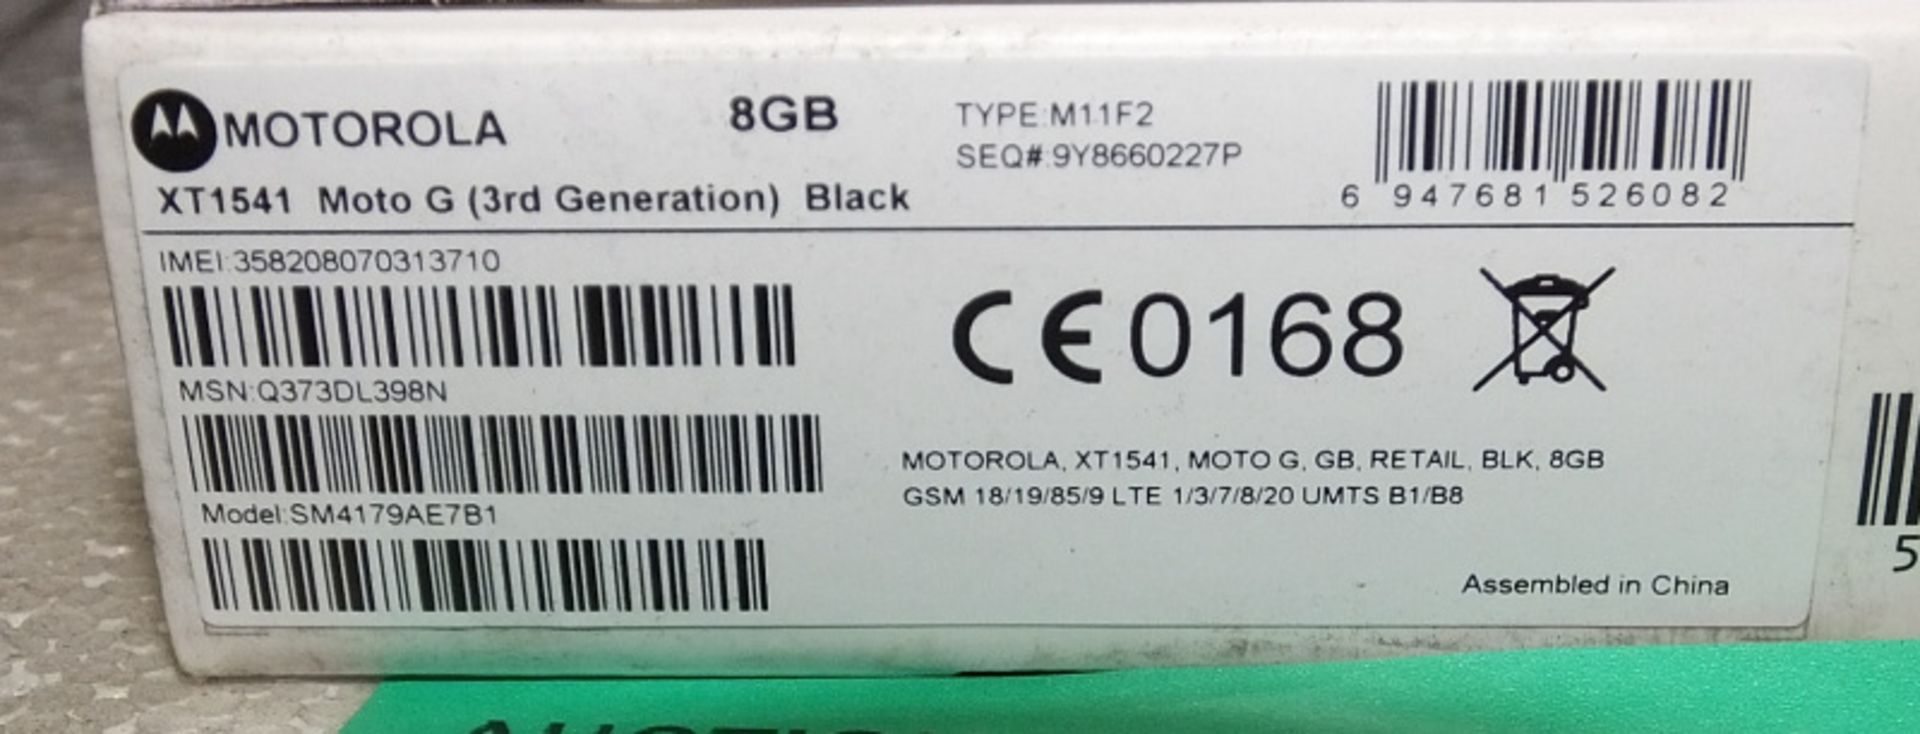 5x Motorola XT1541 Moto G (3rd Generation) - Image 3 of 3